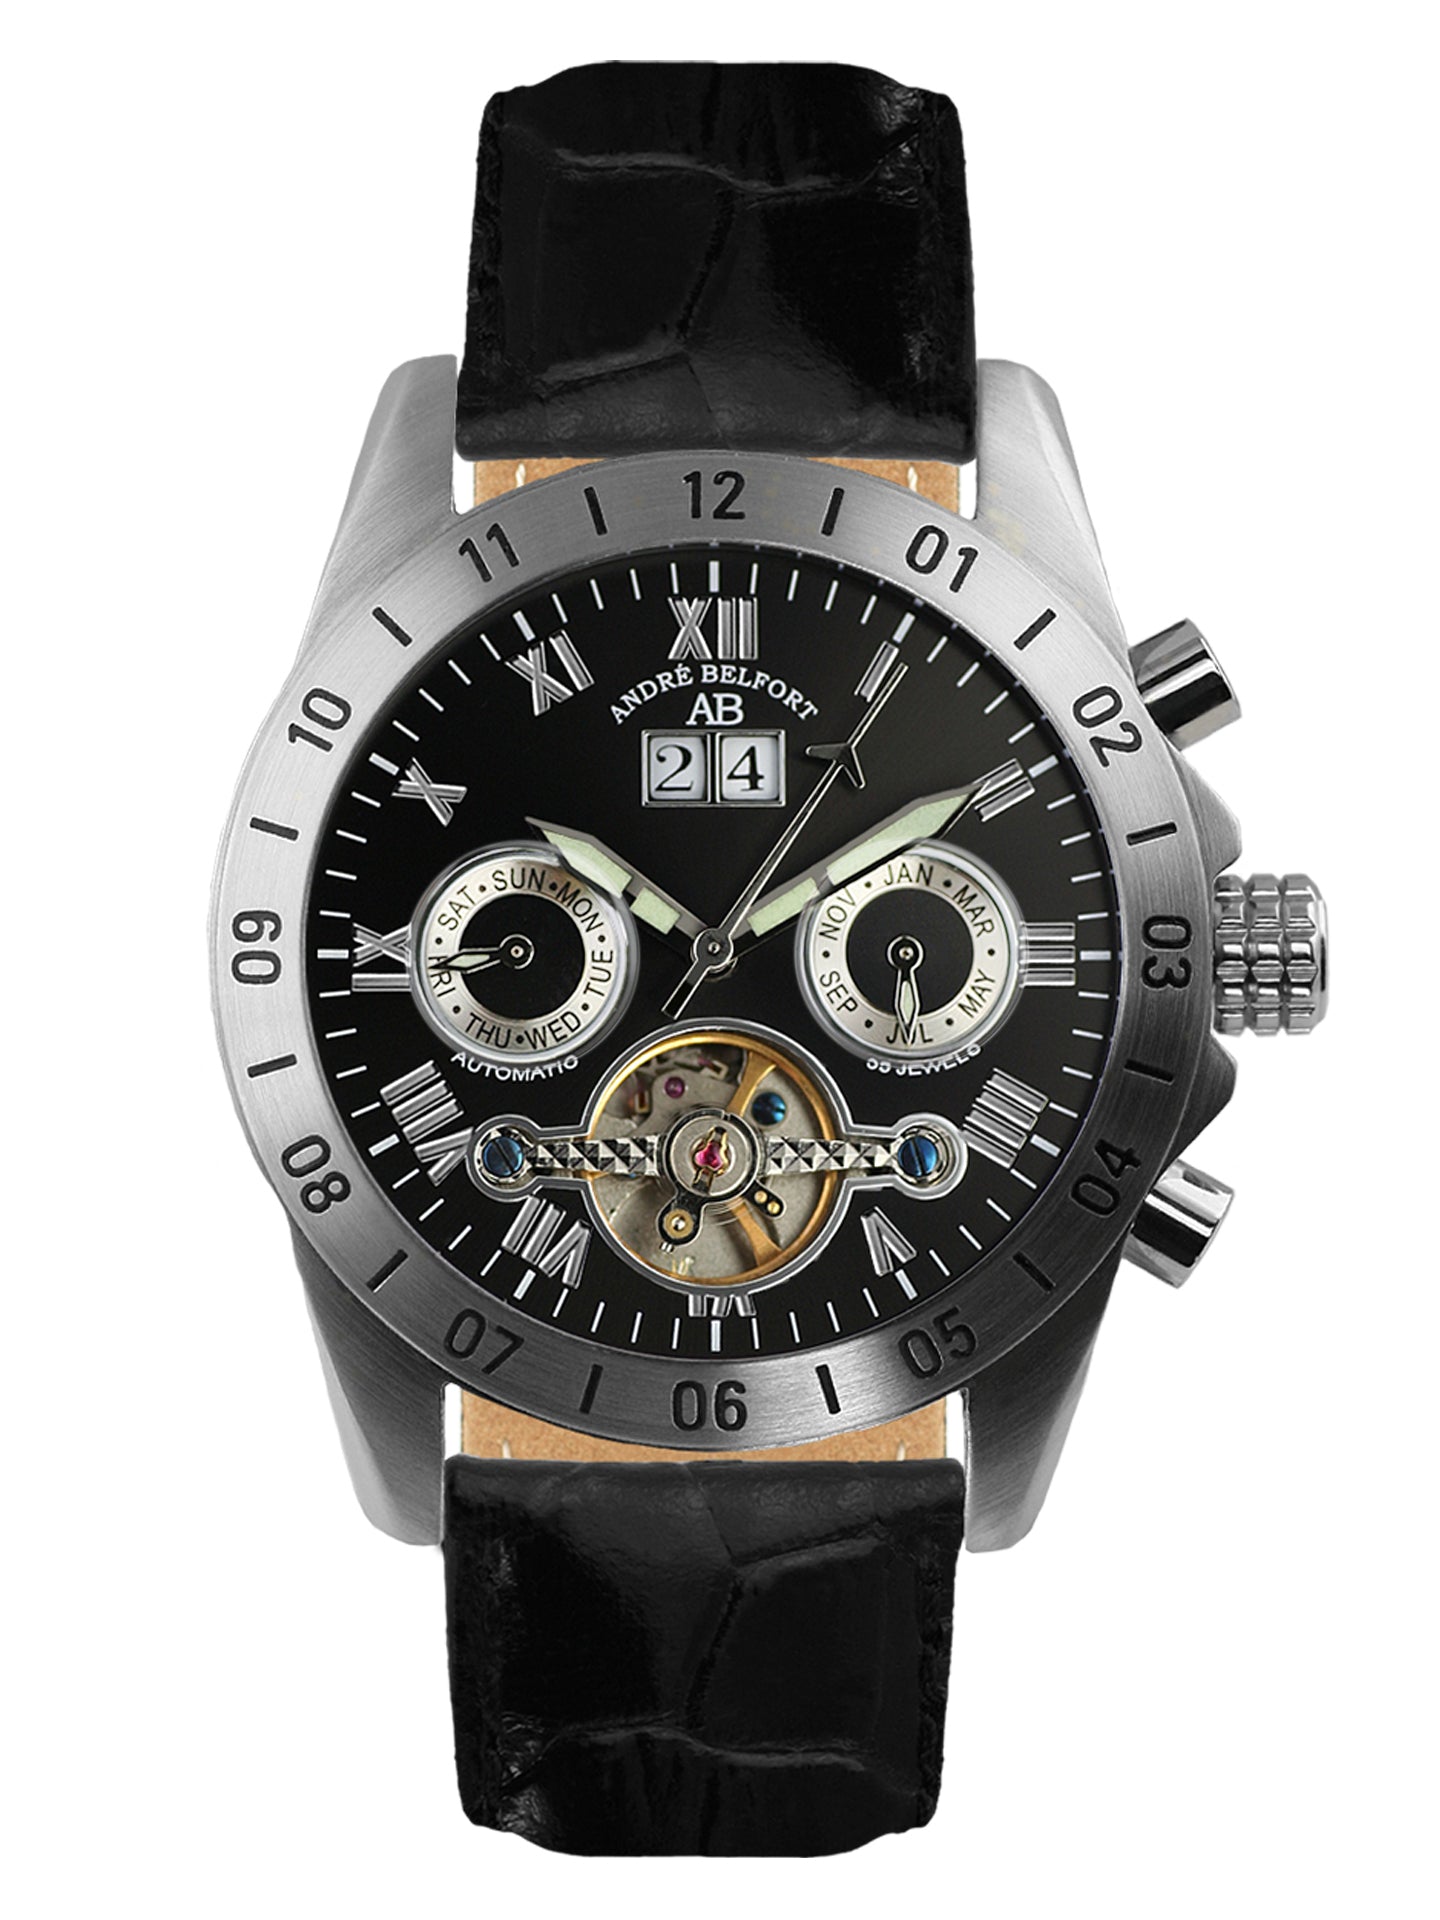 Automatic watches — Galactique — André Belfort — black